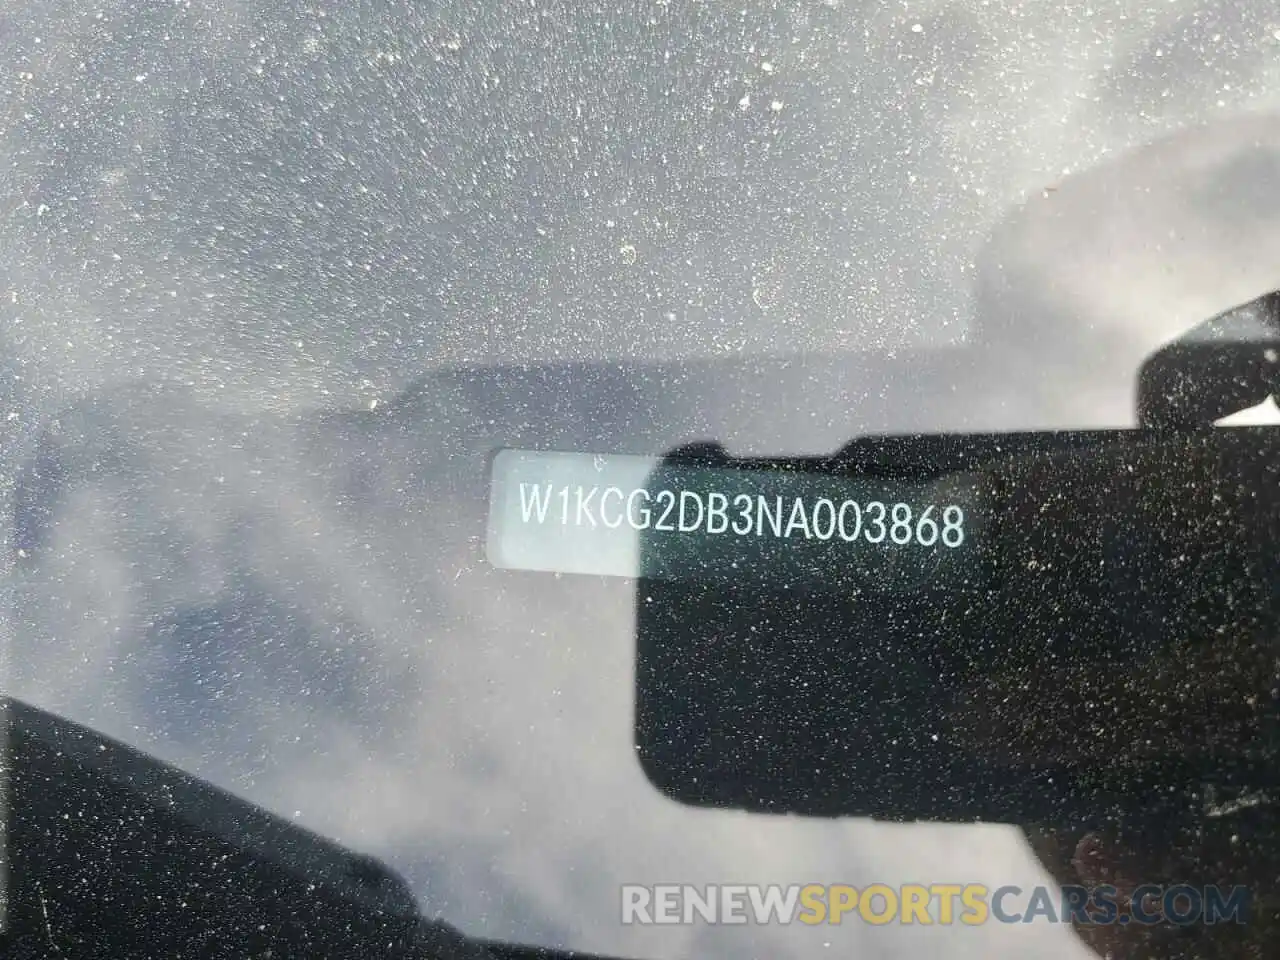 12 Photograph of a damaged car W1KCG2DB3NA003868 MERCEDES-BENZ EQS SEDAN 2022